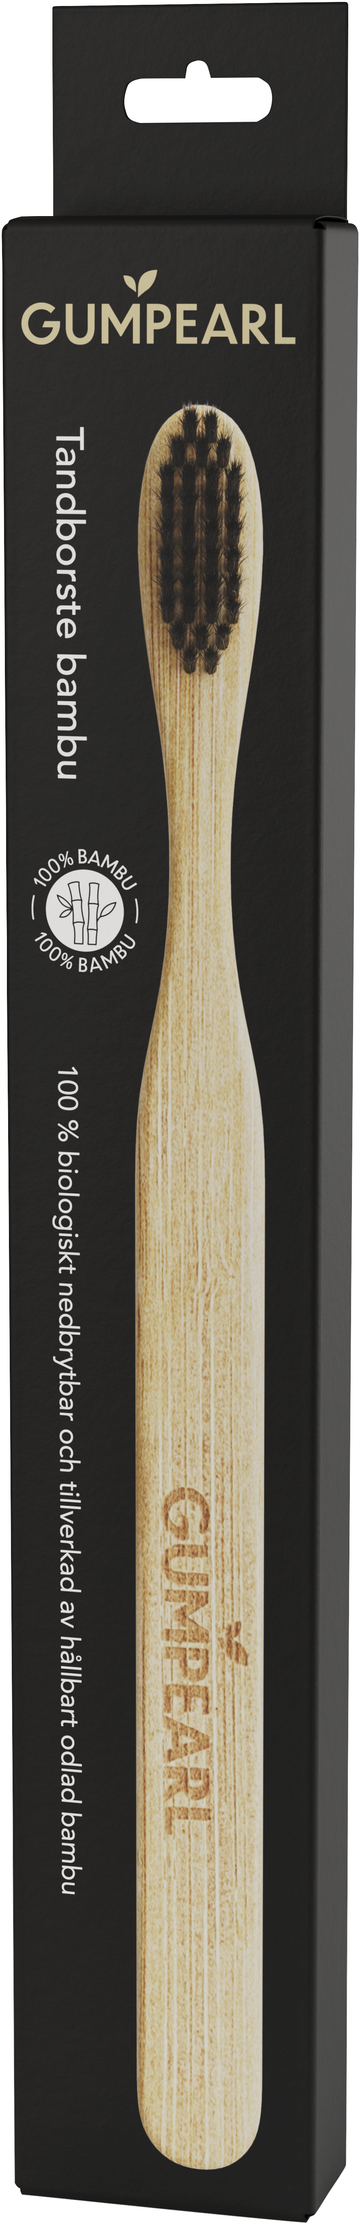 Gumpearl tandborste bamboo